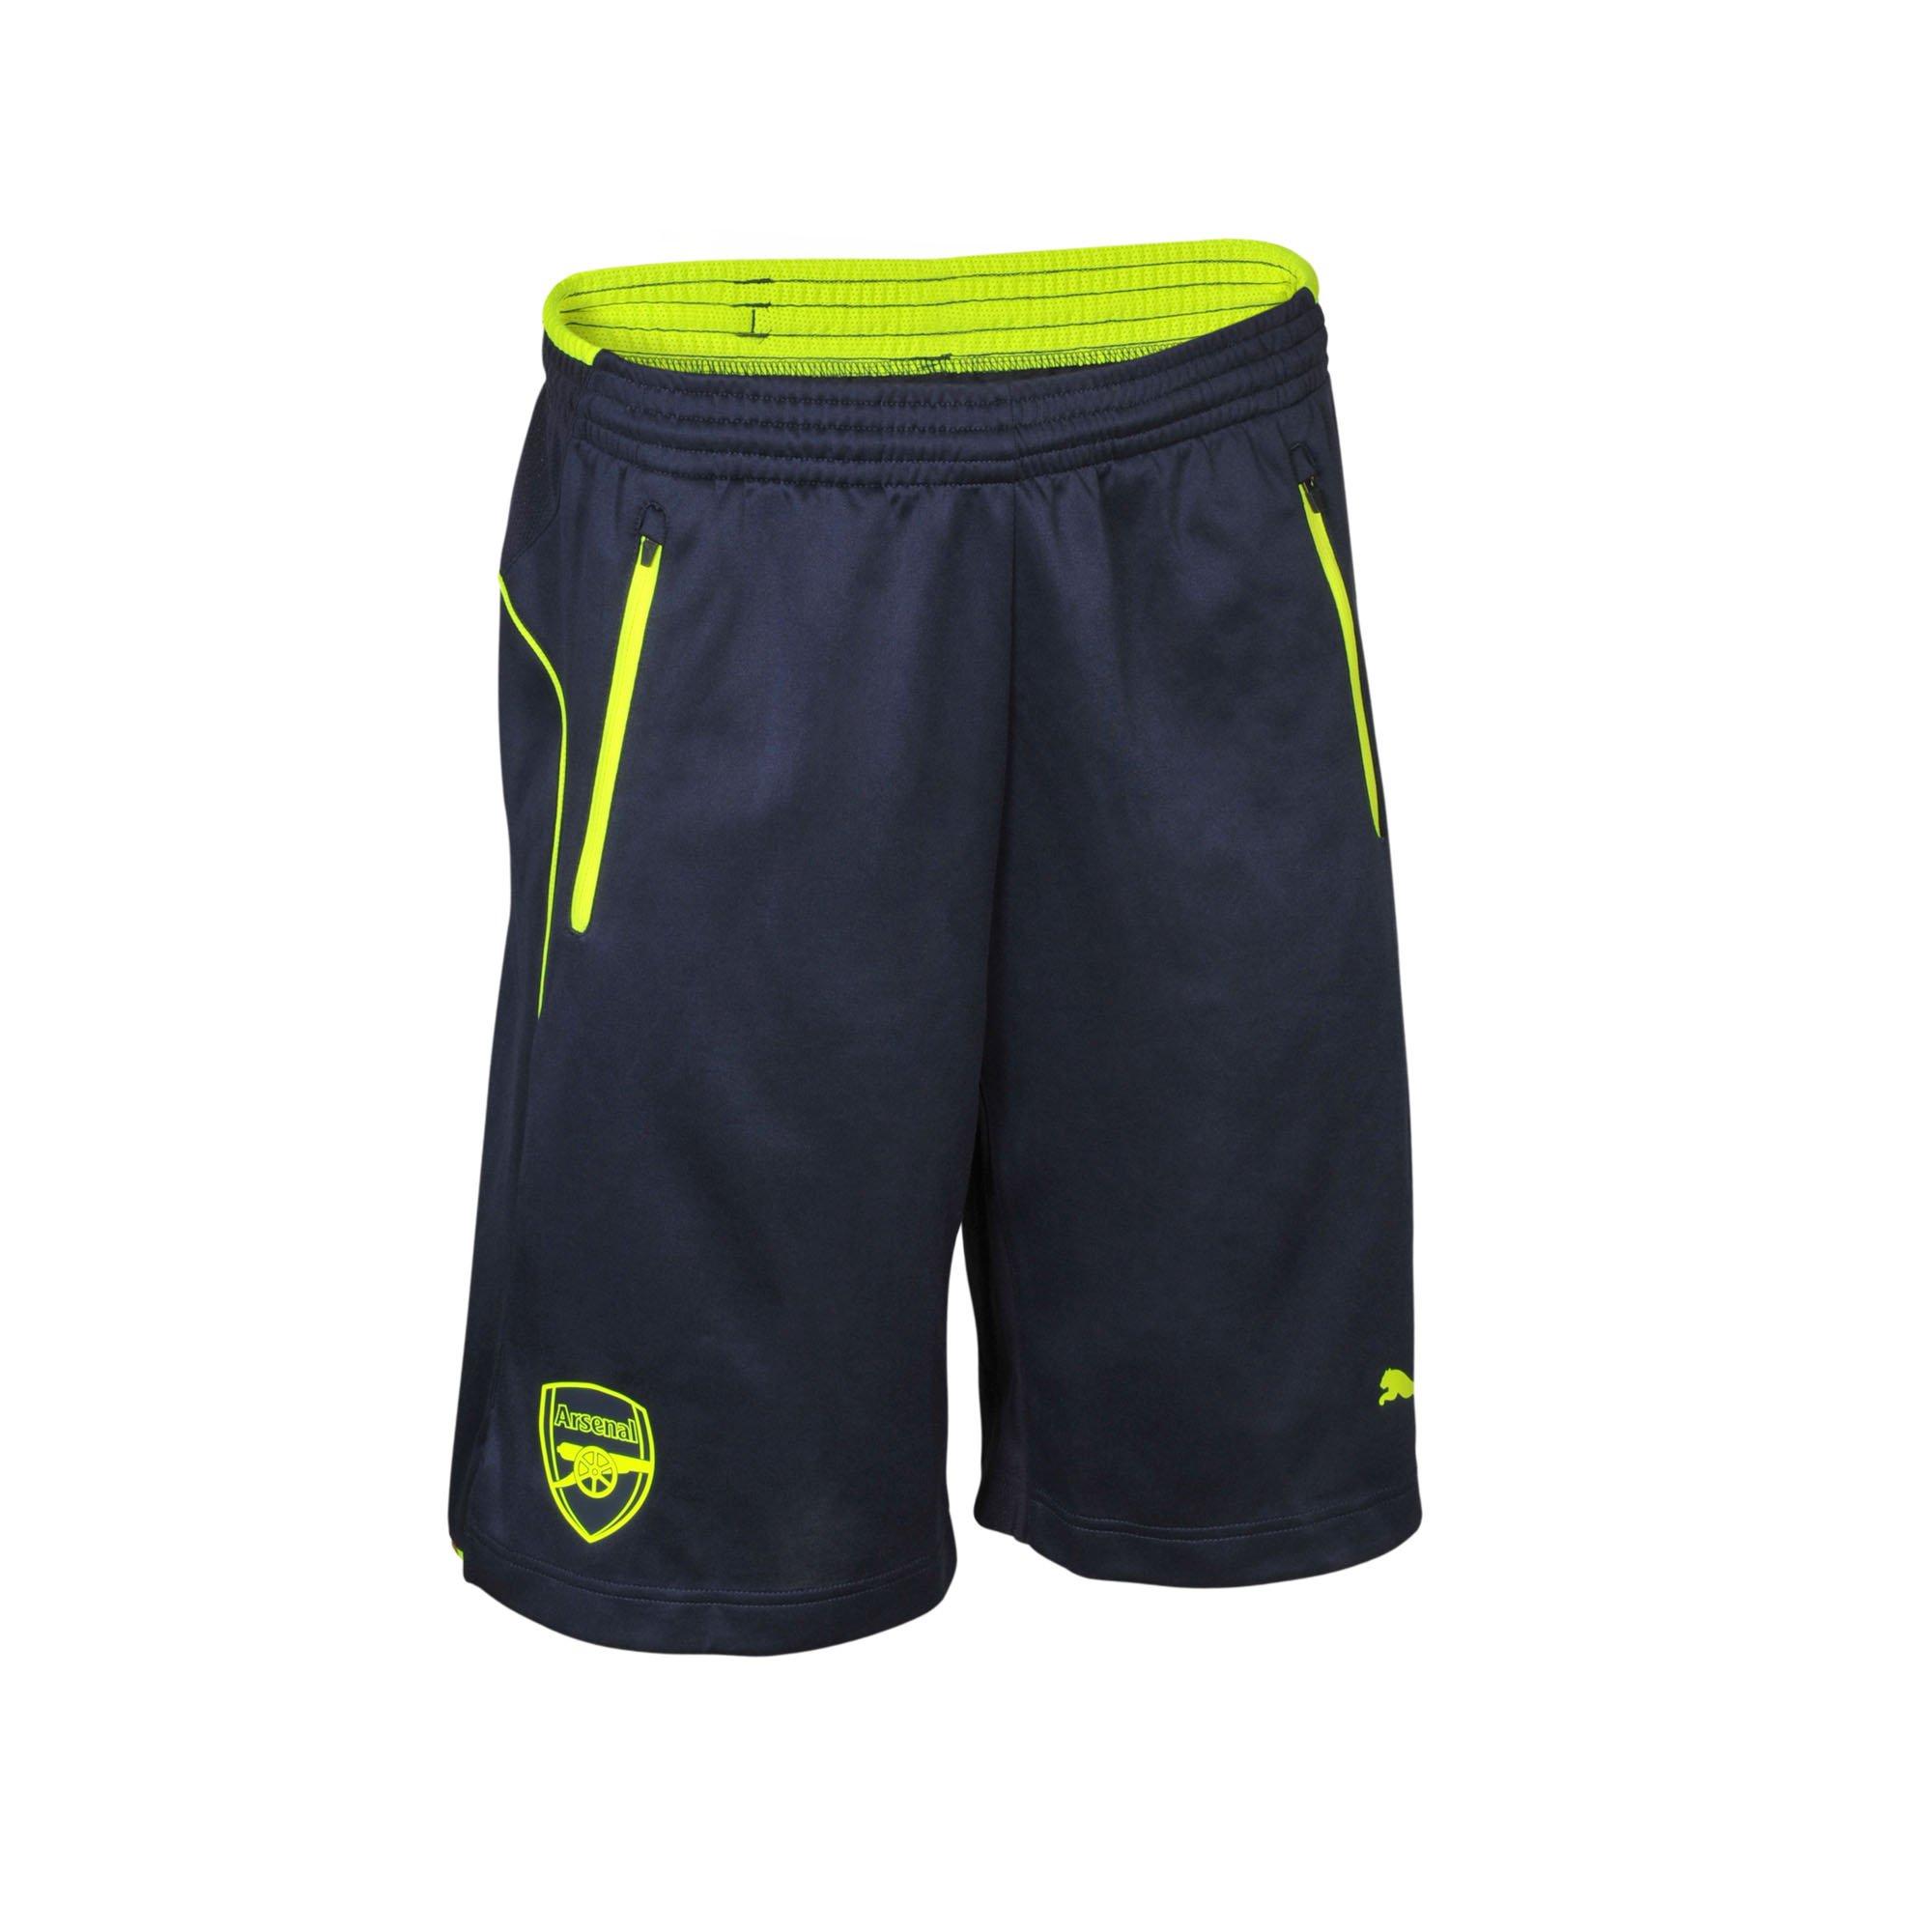 arsenal shorts with pockets